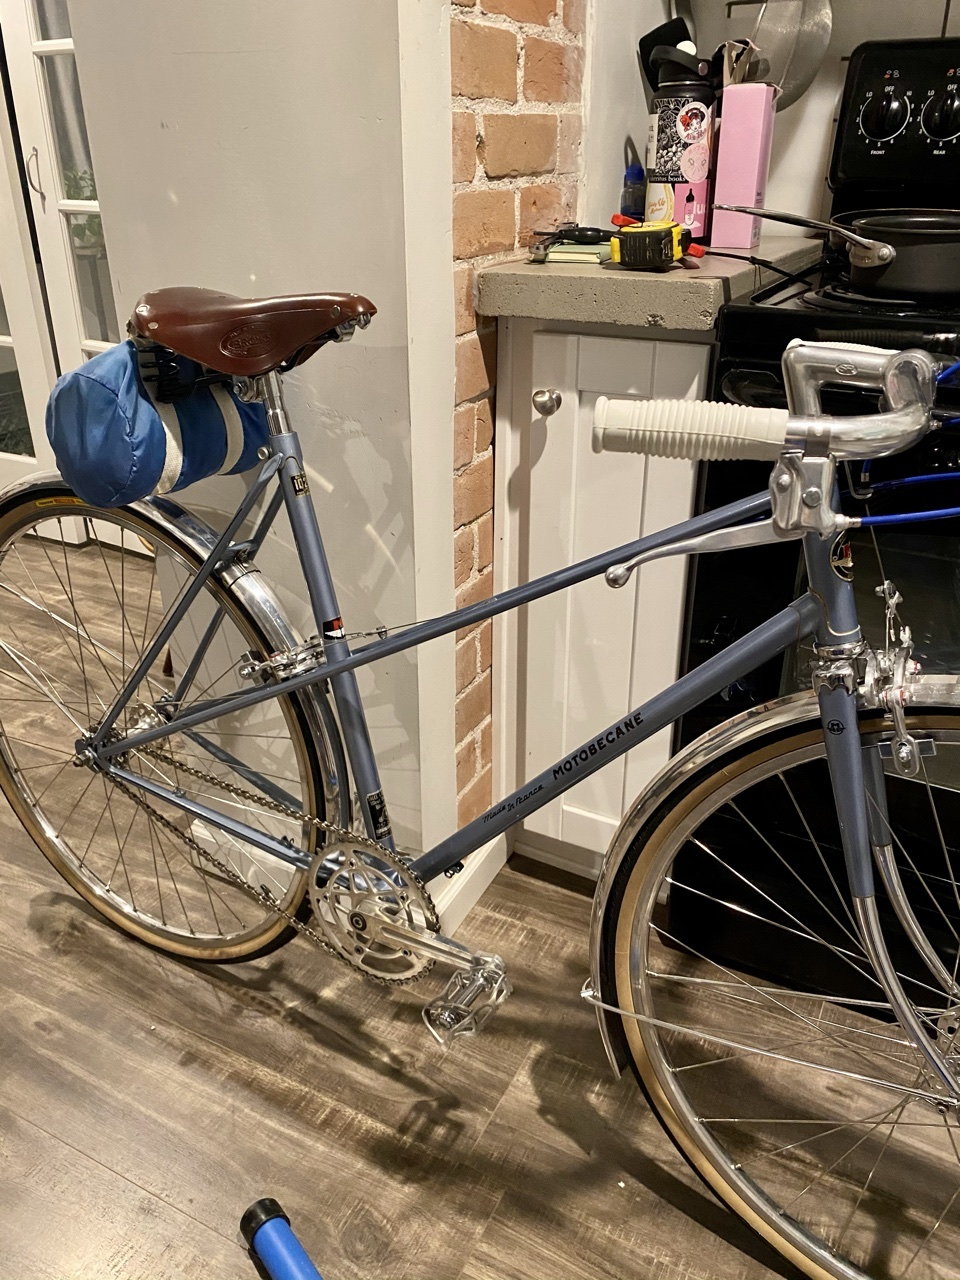 bicyclette mixte sport marque hirondelle annee 1960